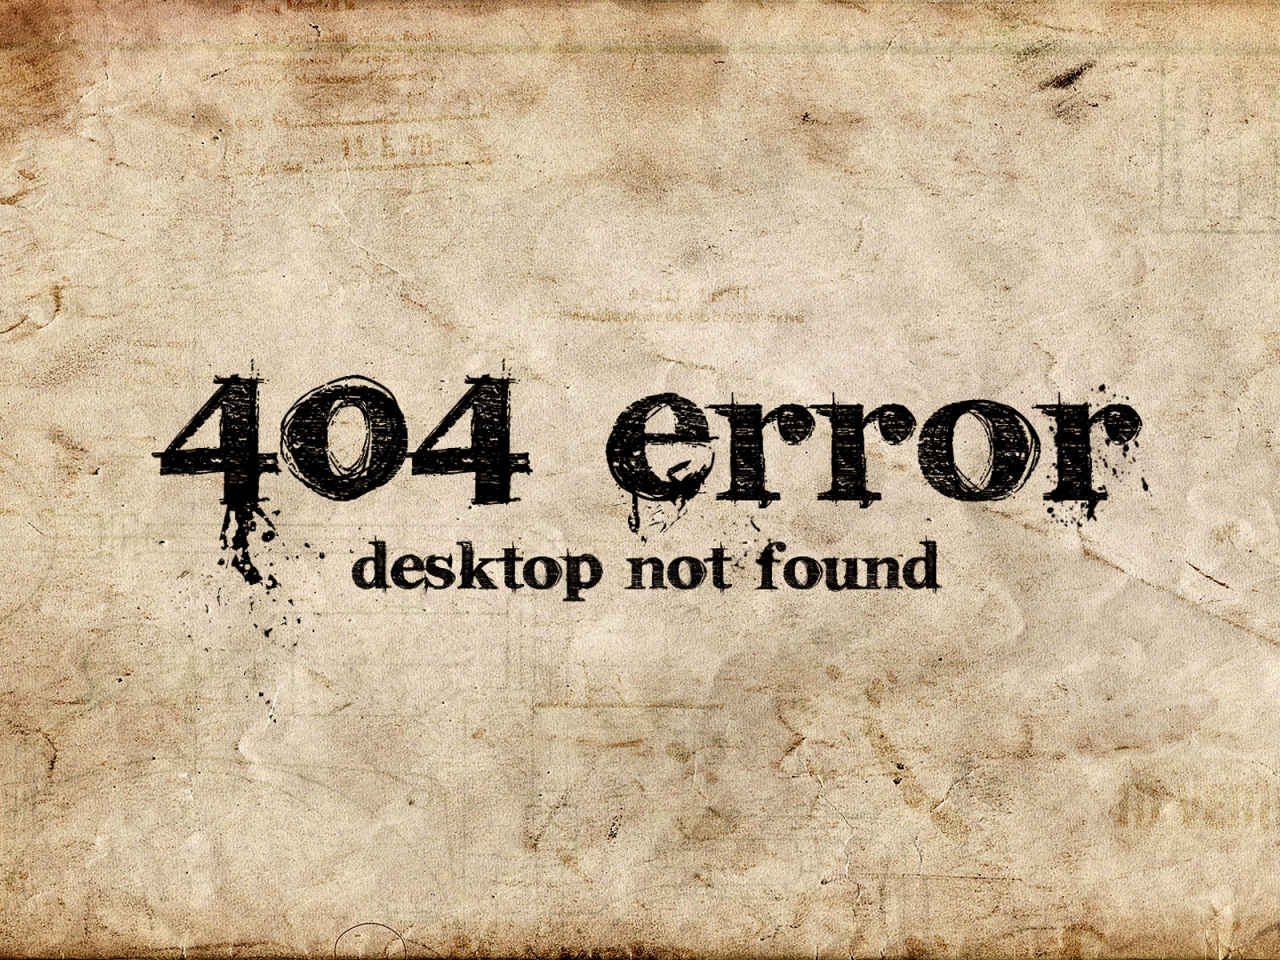 Error 404 for 1280 x 960 resolution